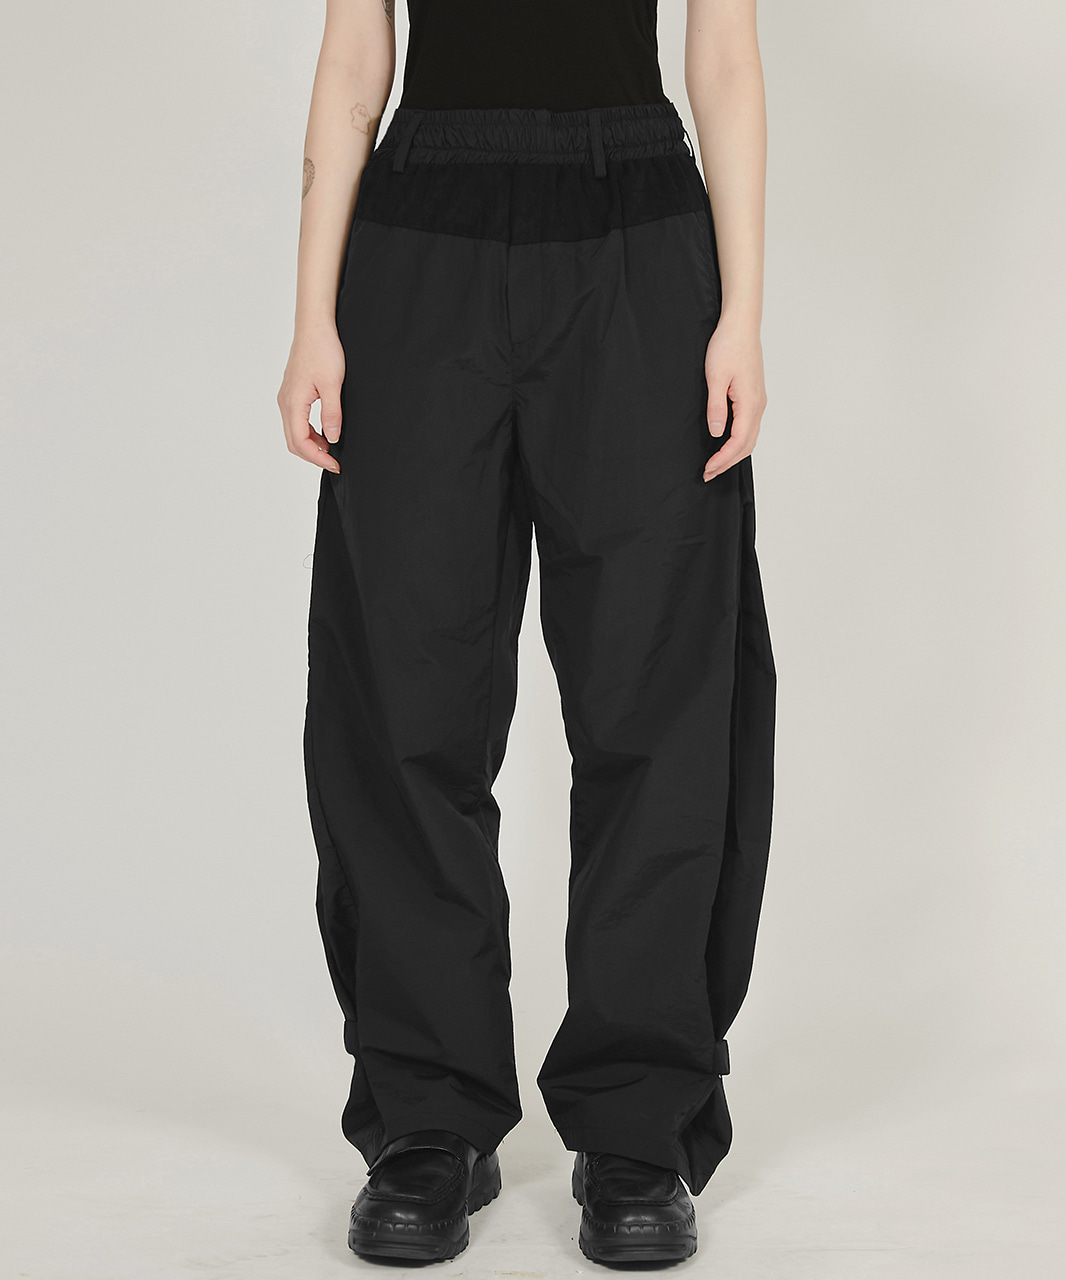 FLARE UP플레어업 Wide Split Pants - Black (FL-218)